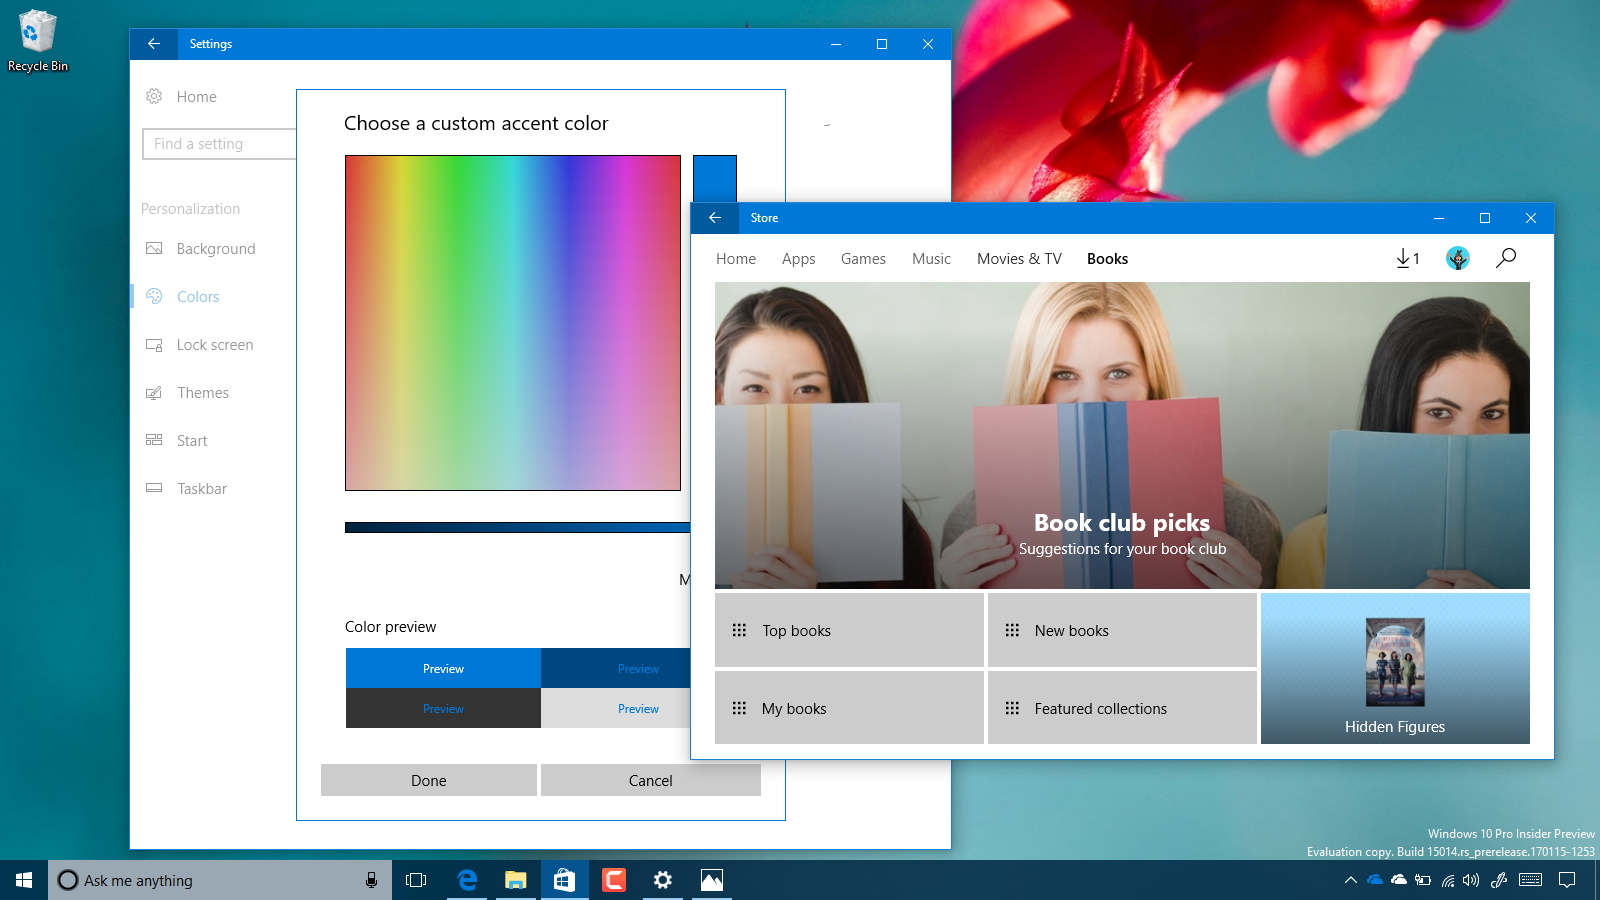 Windows 10 build 15014 hands-on video